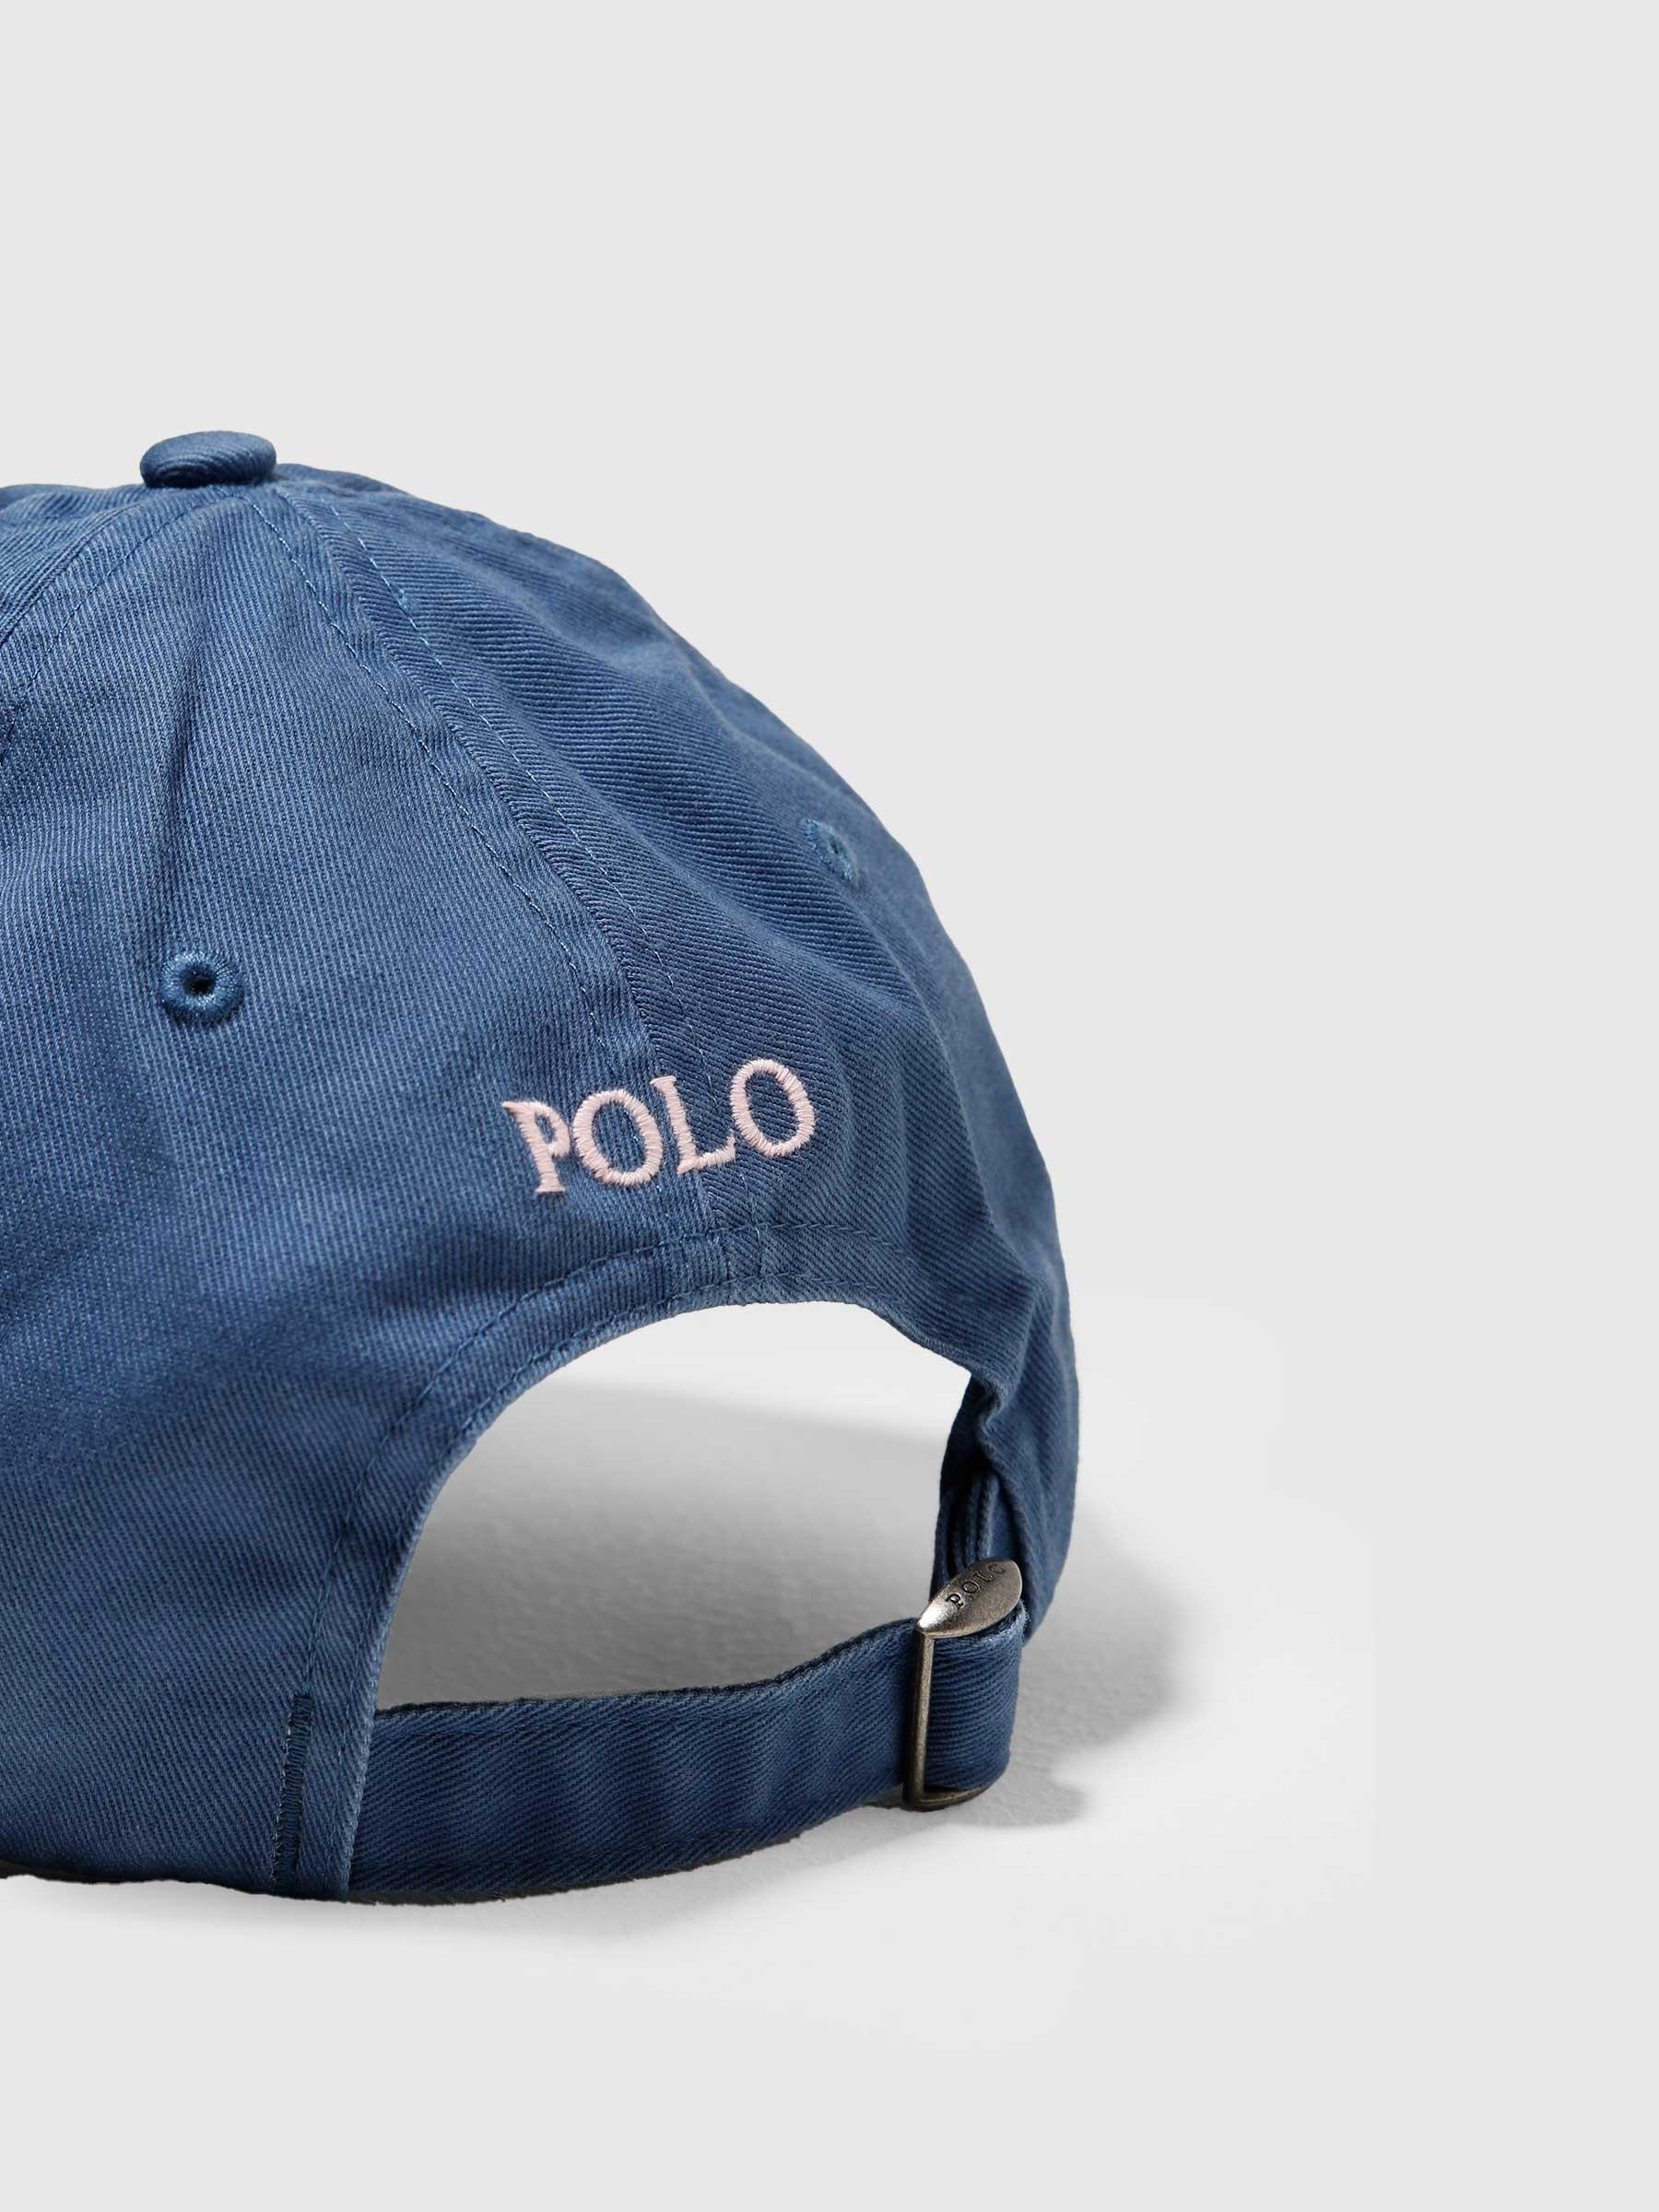 Polo Ralph Lauren Classic Cotton Chino Sports Cap